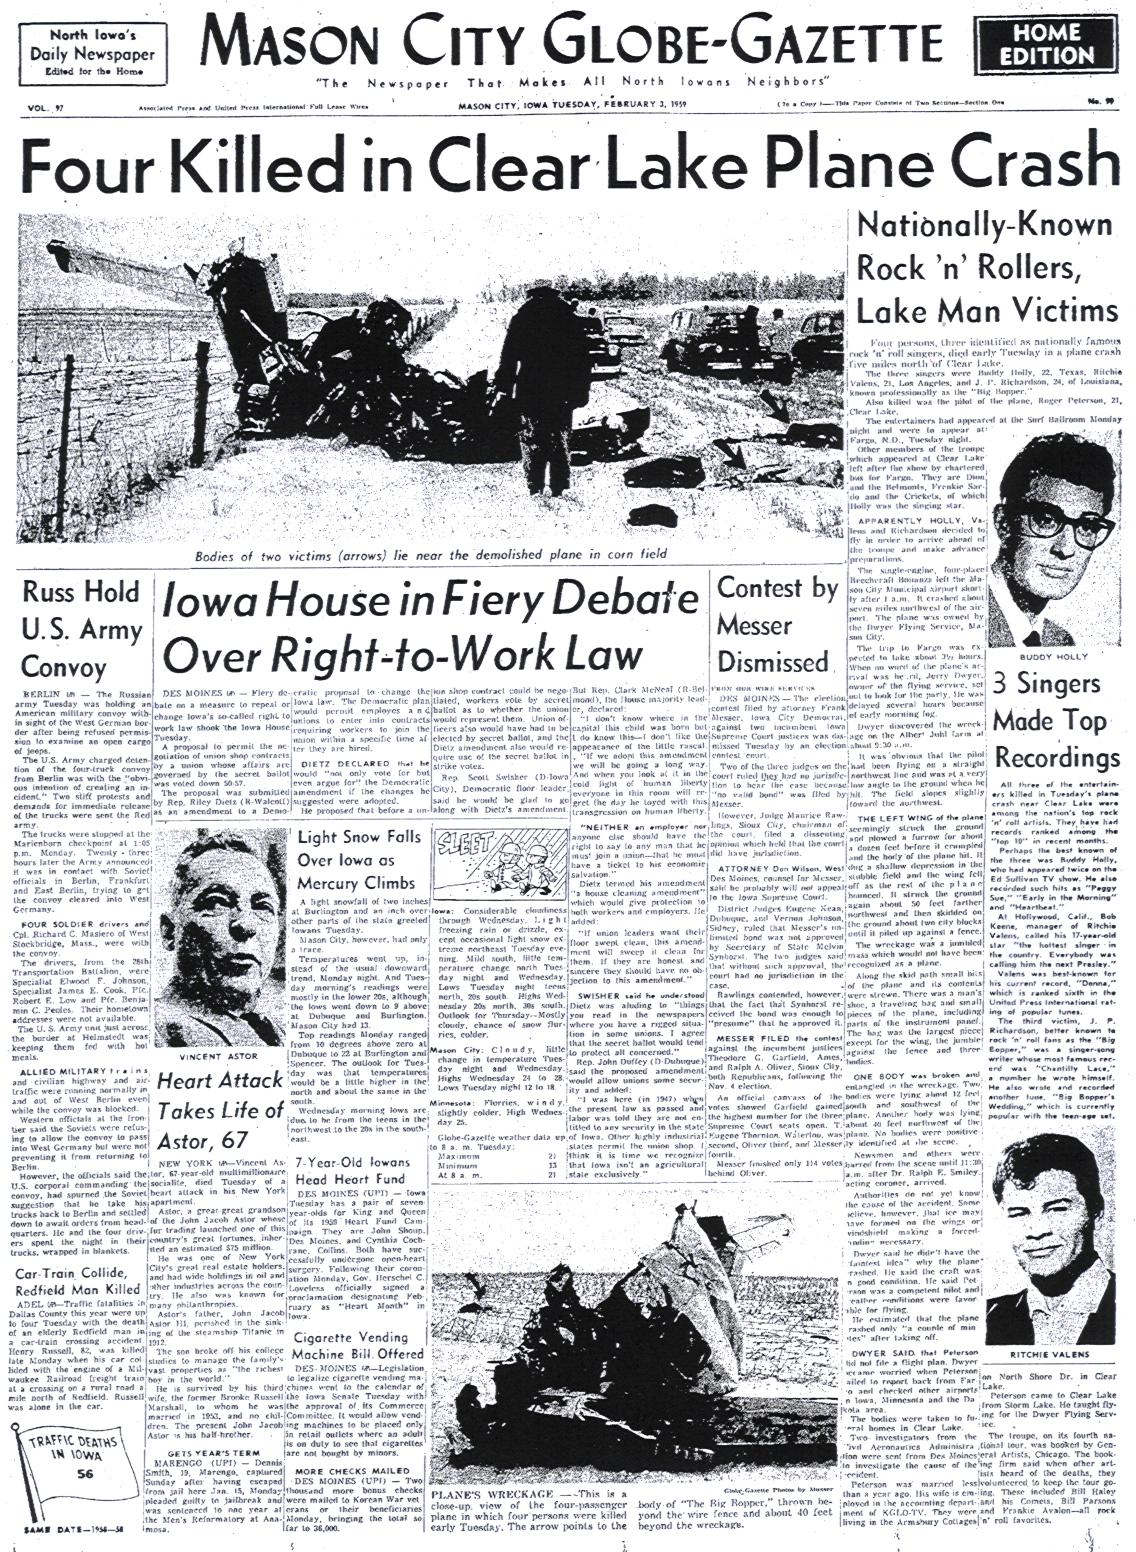 Mason City (Iowa) Globe-Gazette, February 3, 1959